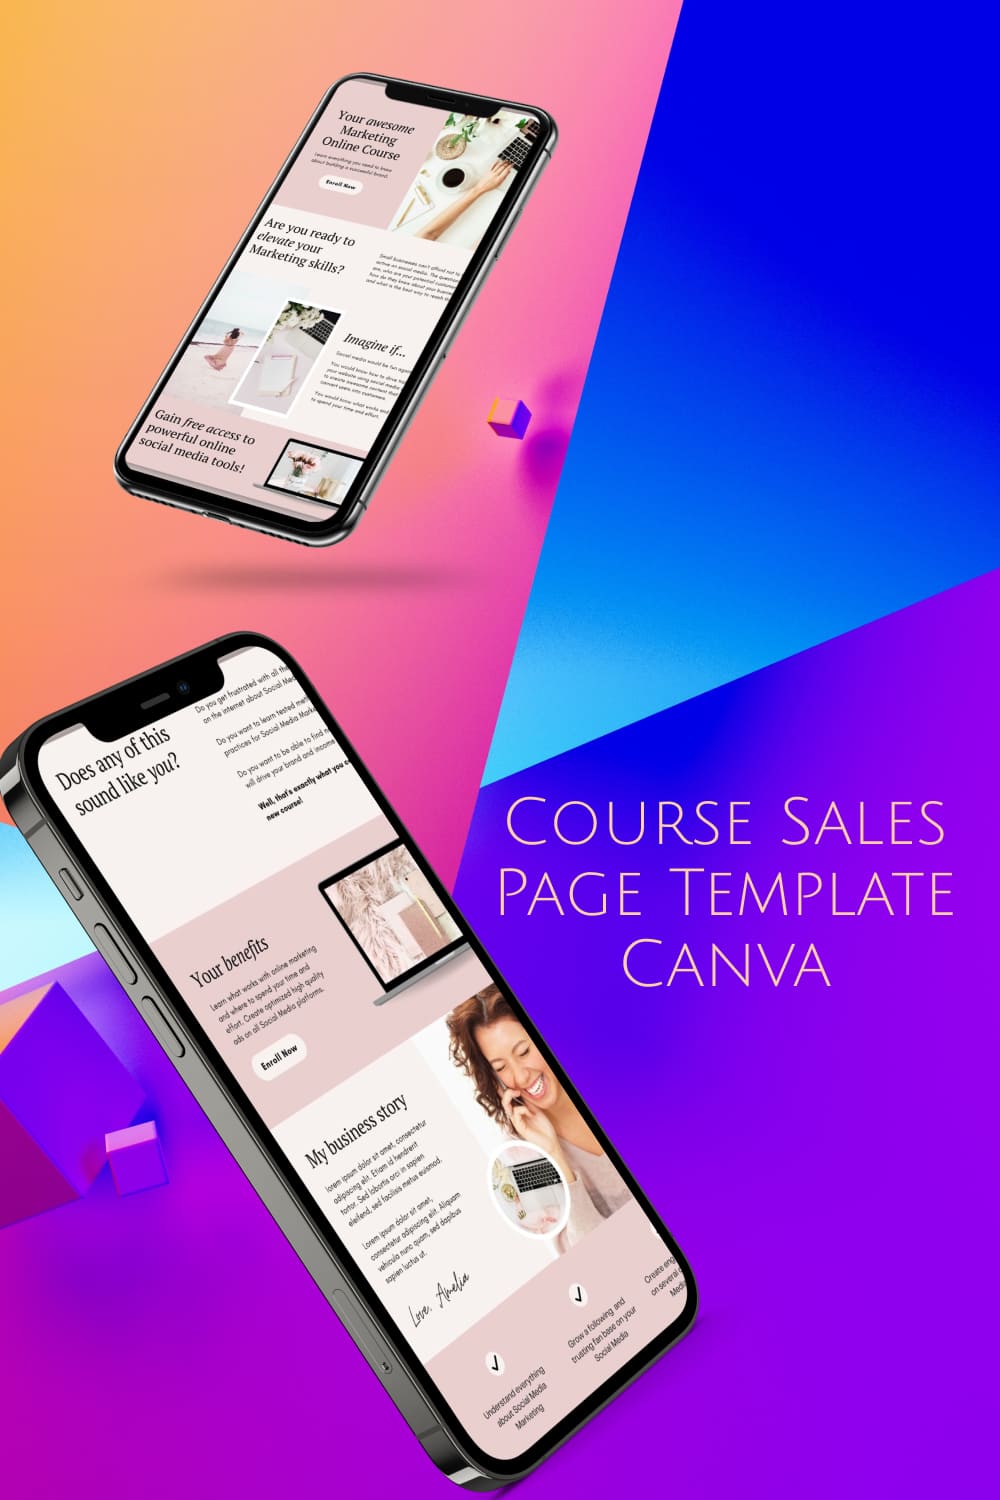 Canva Course Sales Page Template pinterest image.